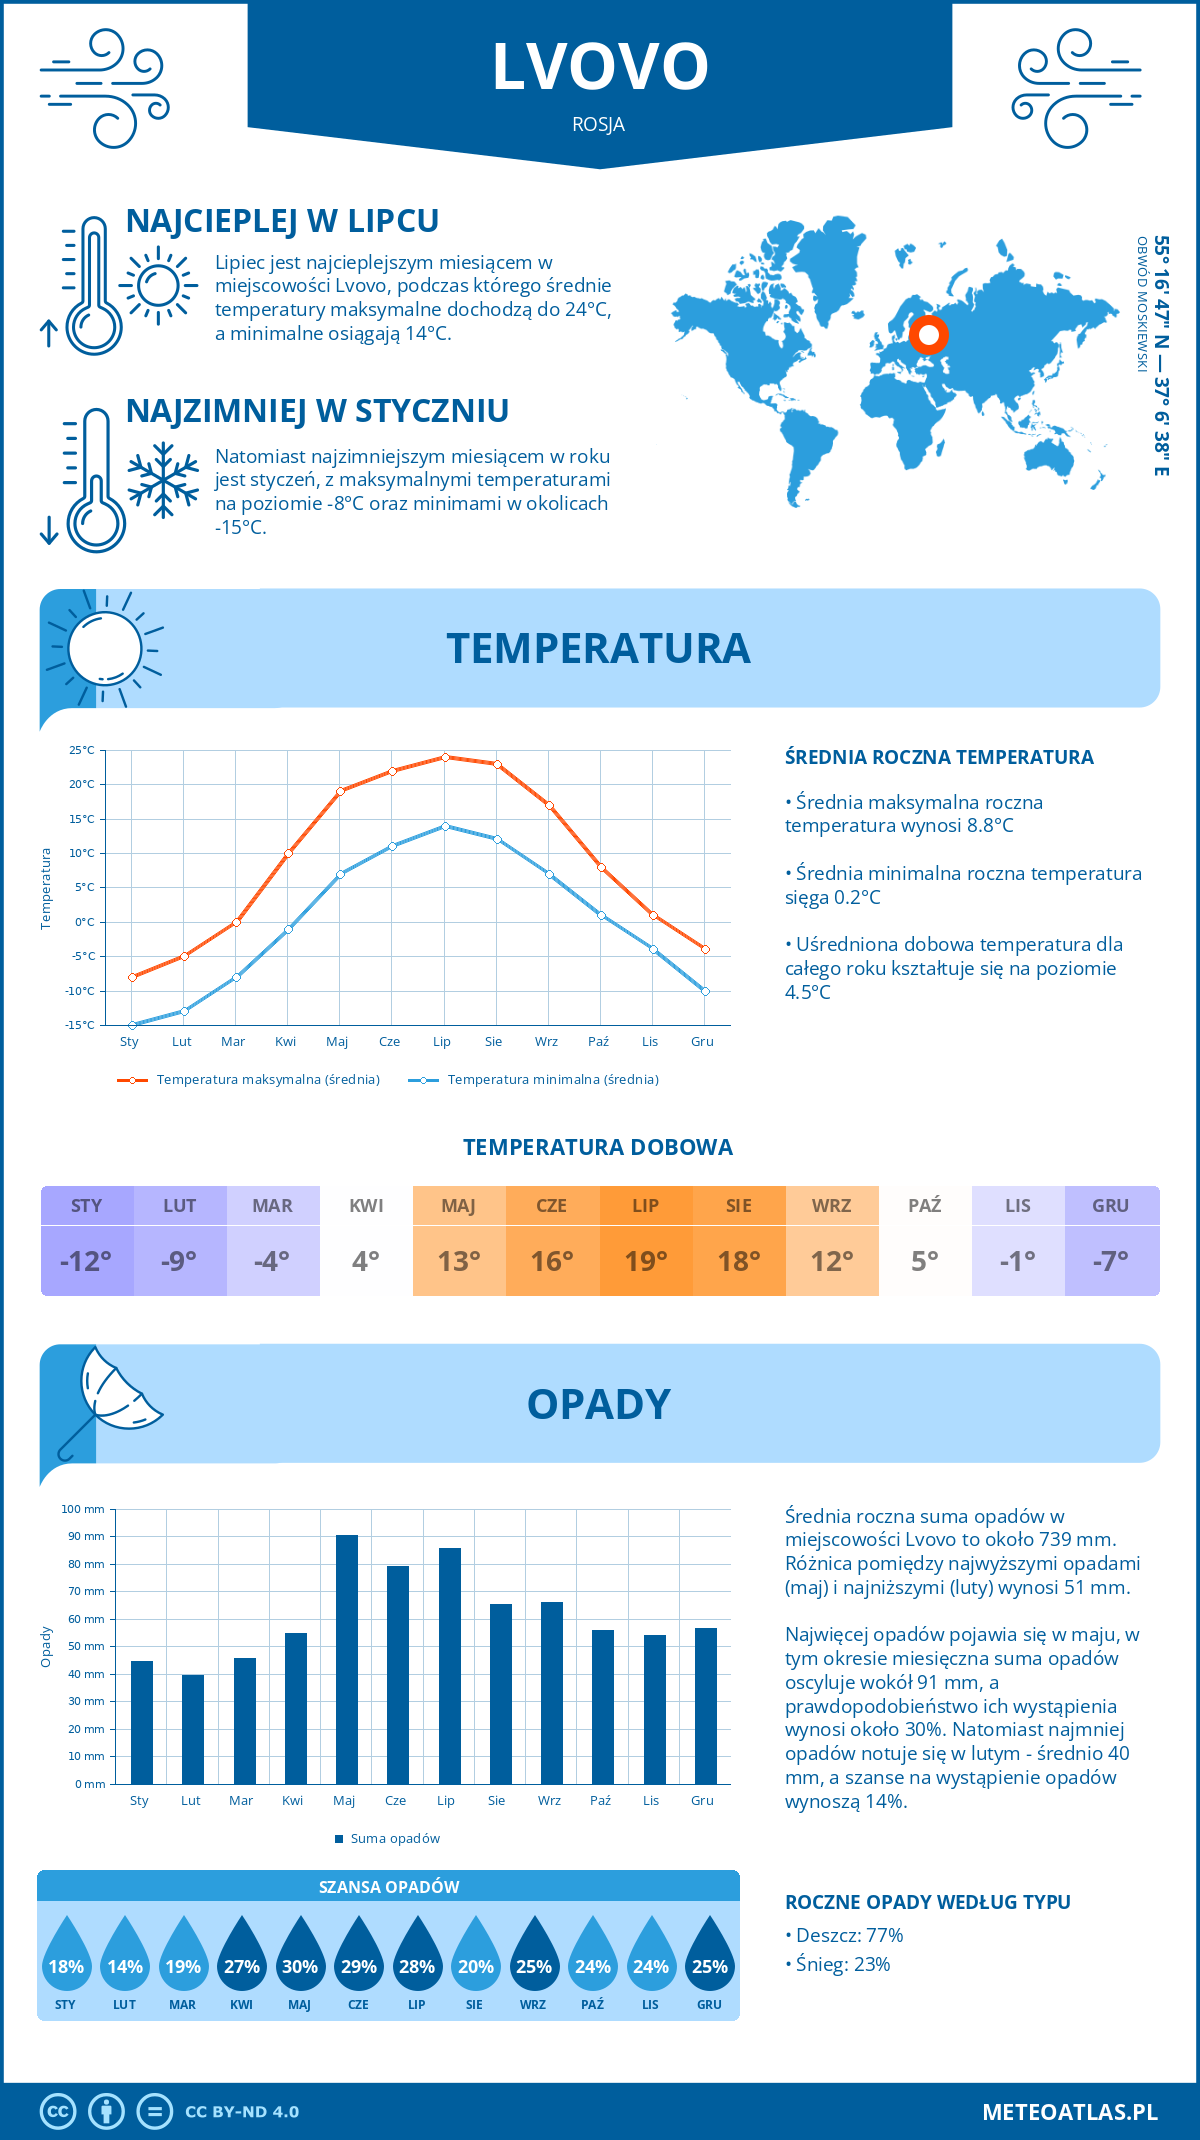 Pogoda Lvovo (Rosja). Temperatura oraz opady.